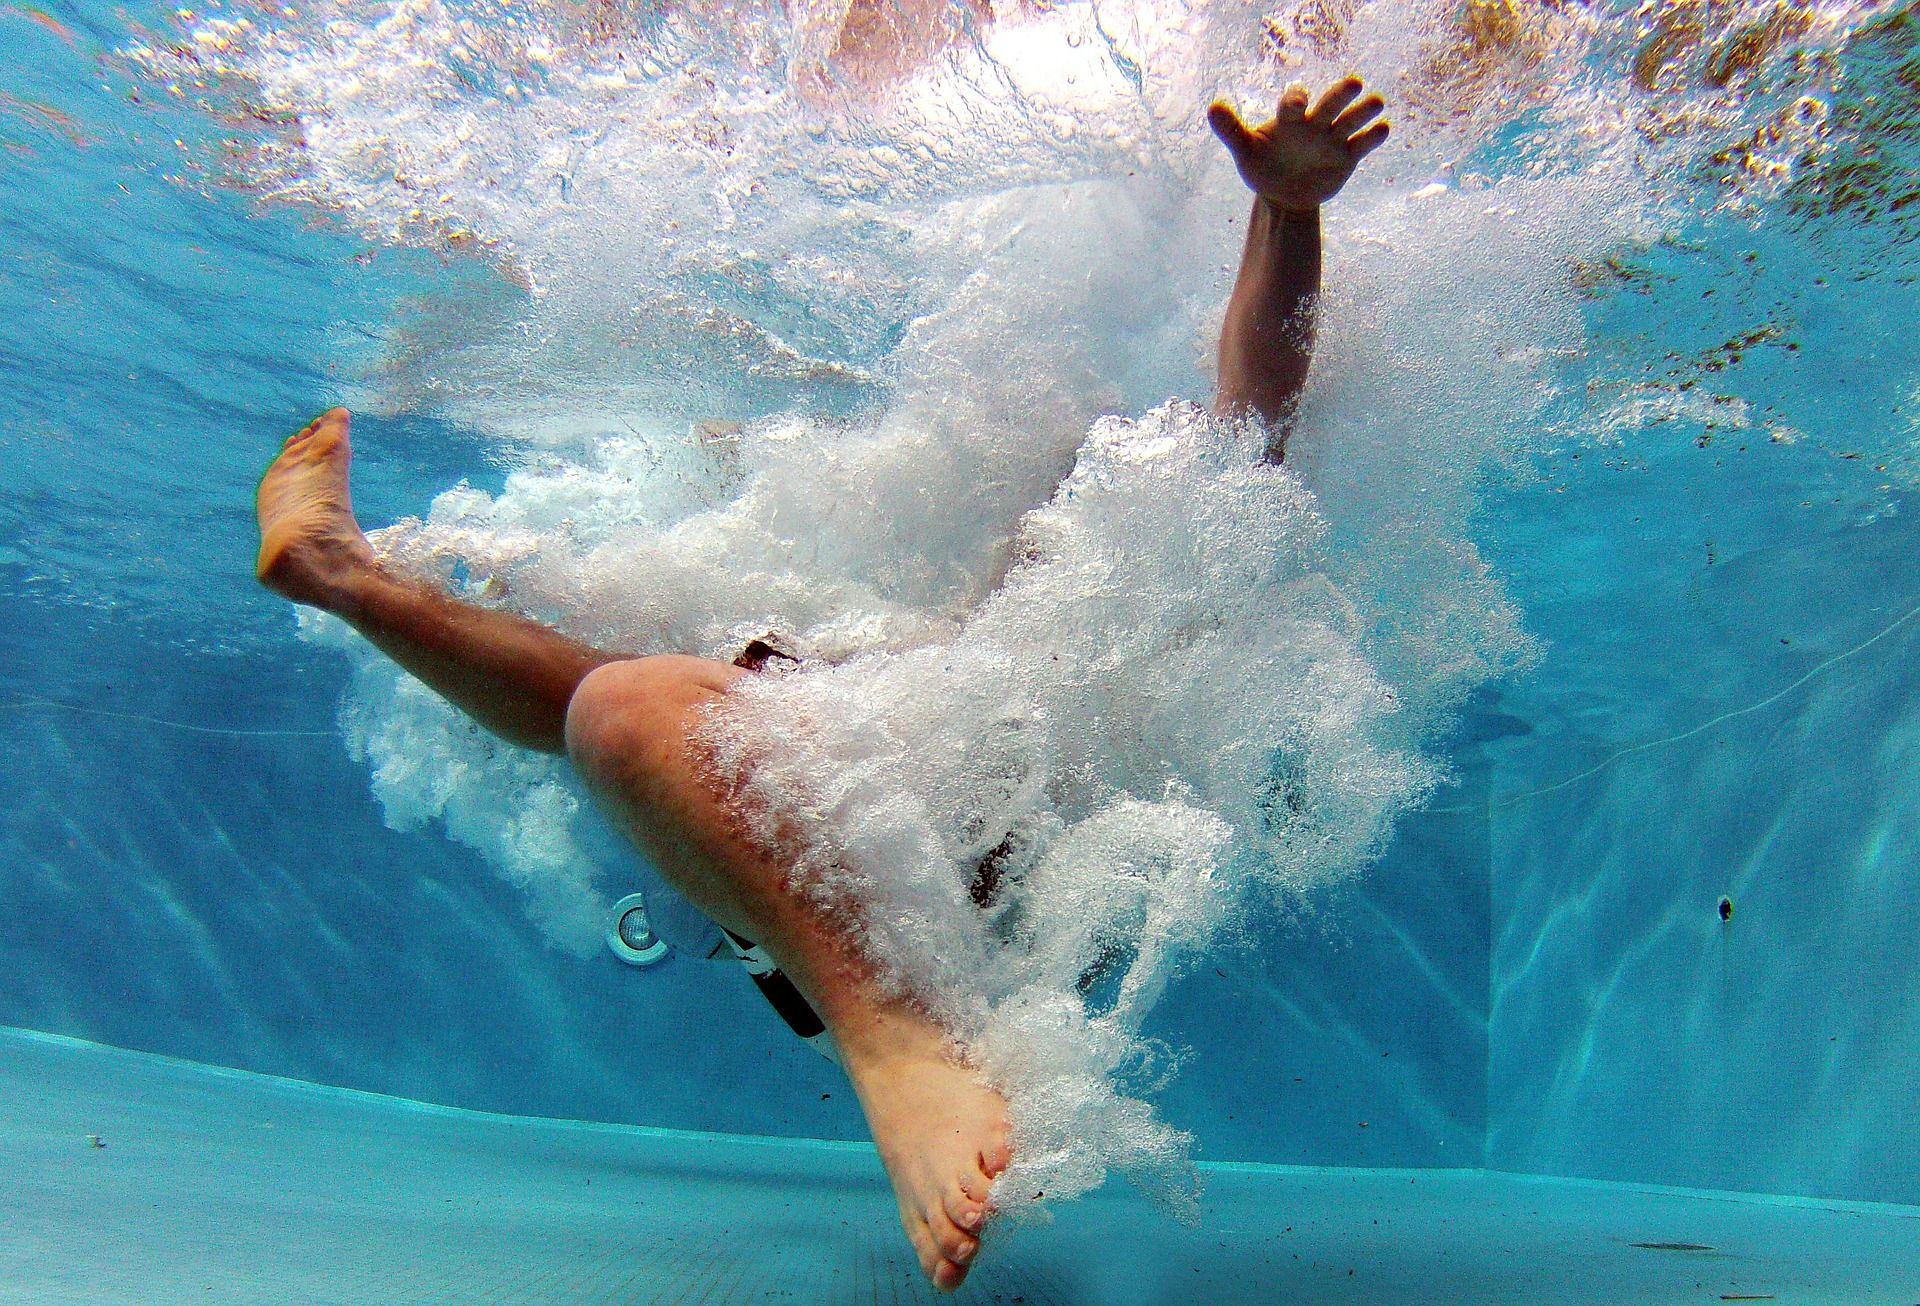 Ofegat piscina - Pixabay / Moerschy